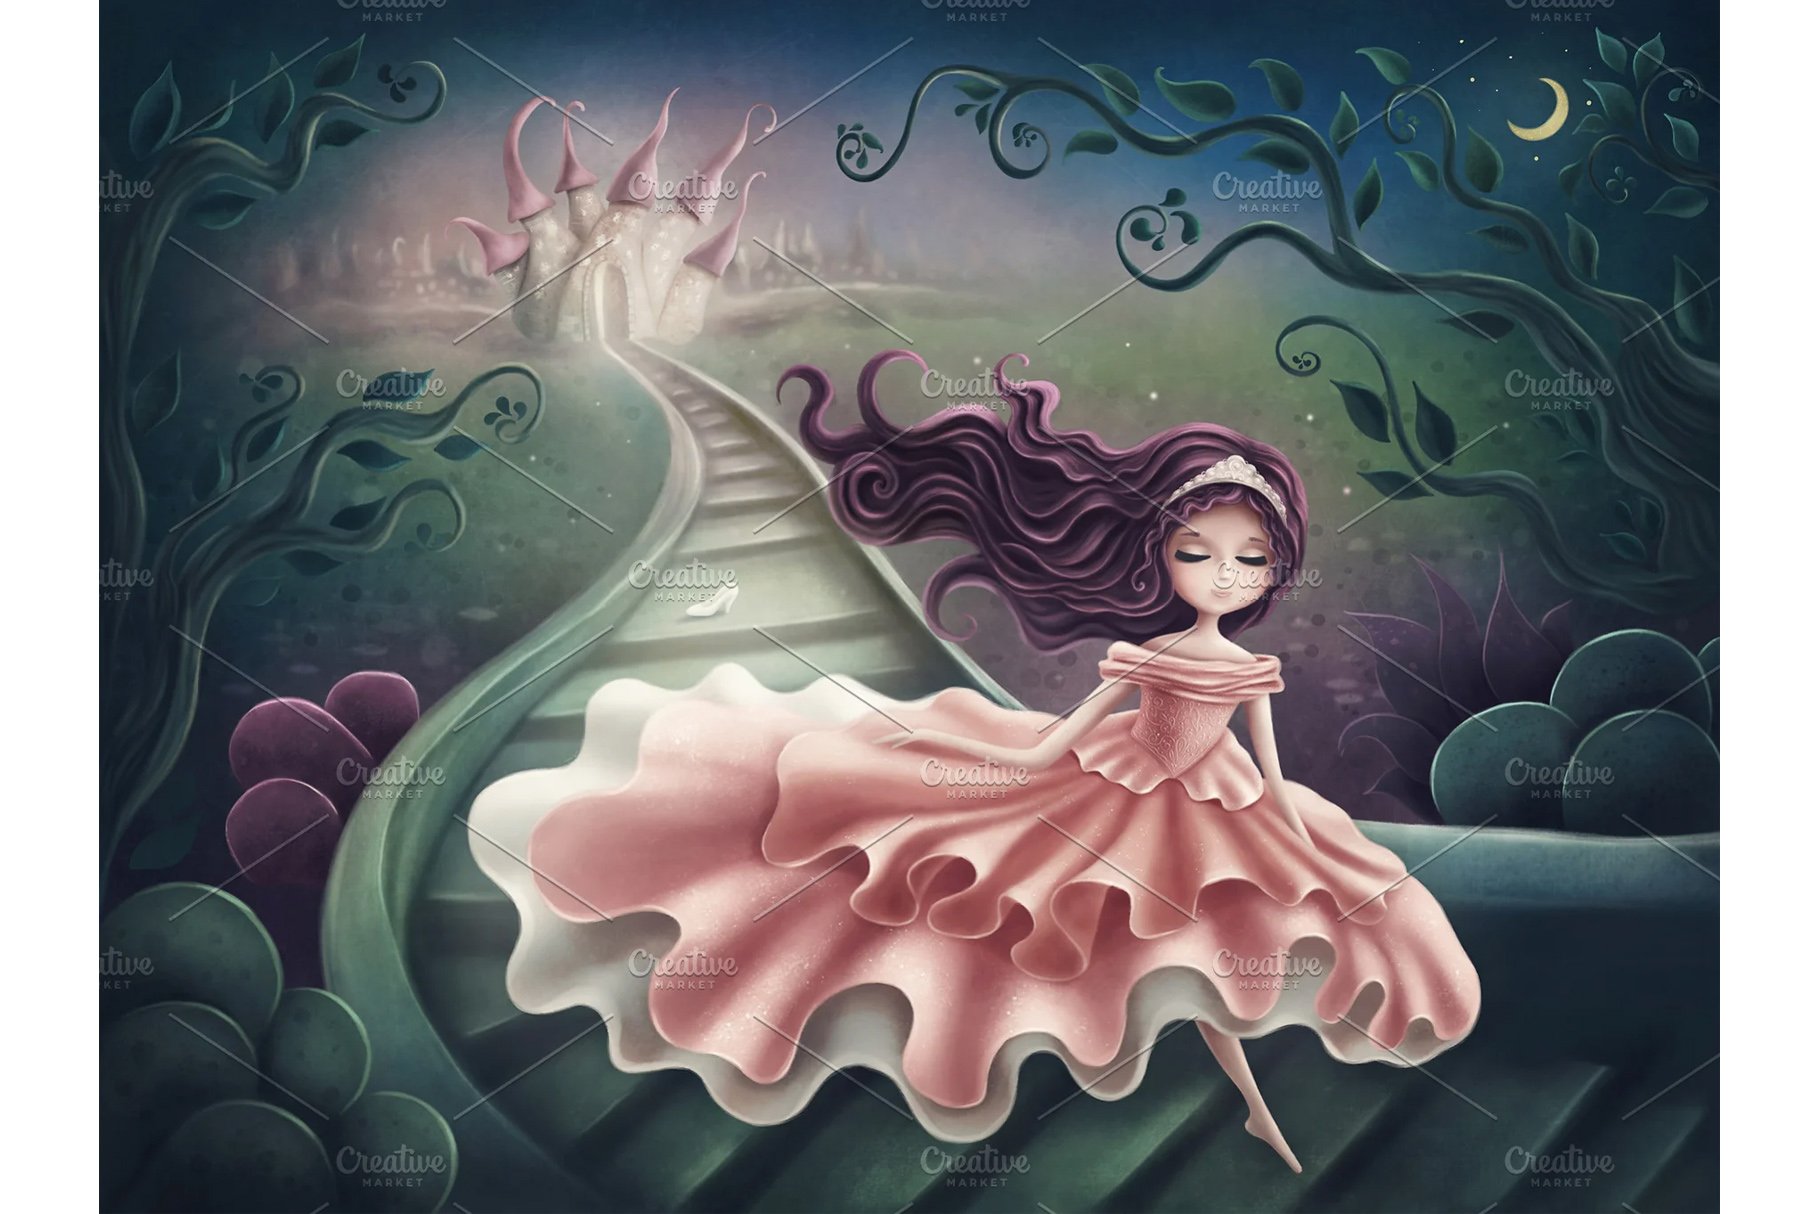 Princess Girl Running Away cover image.